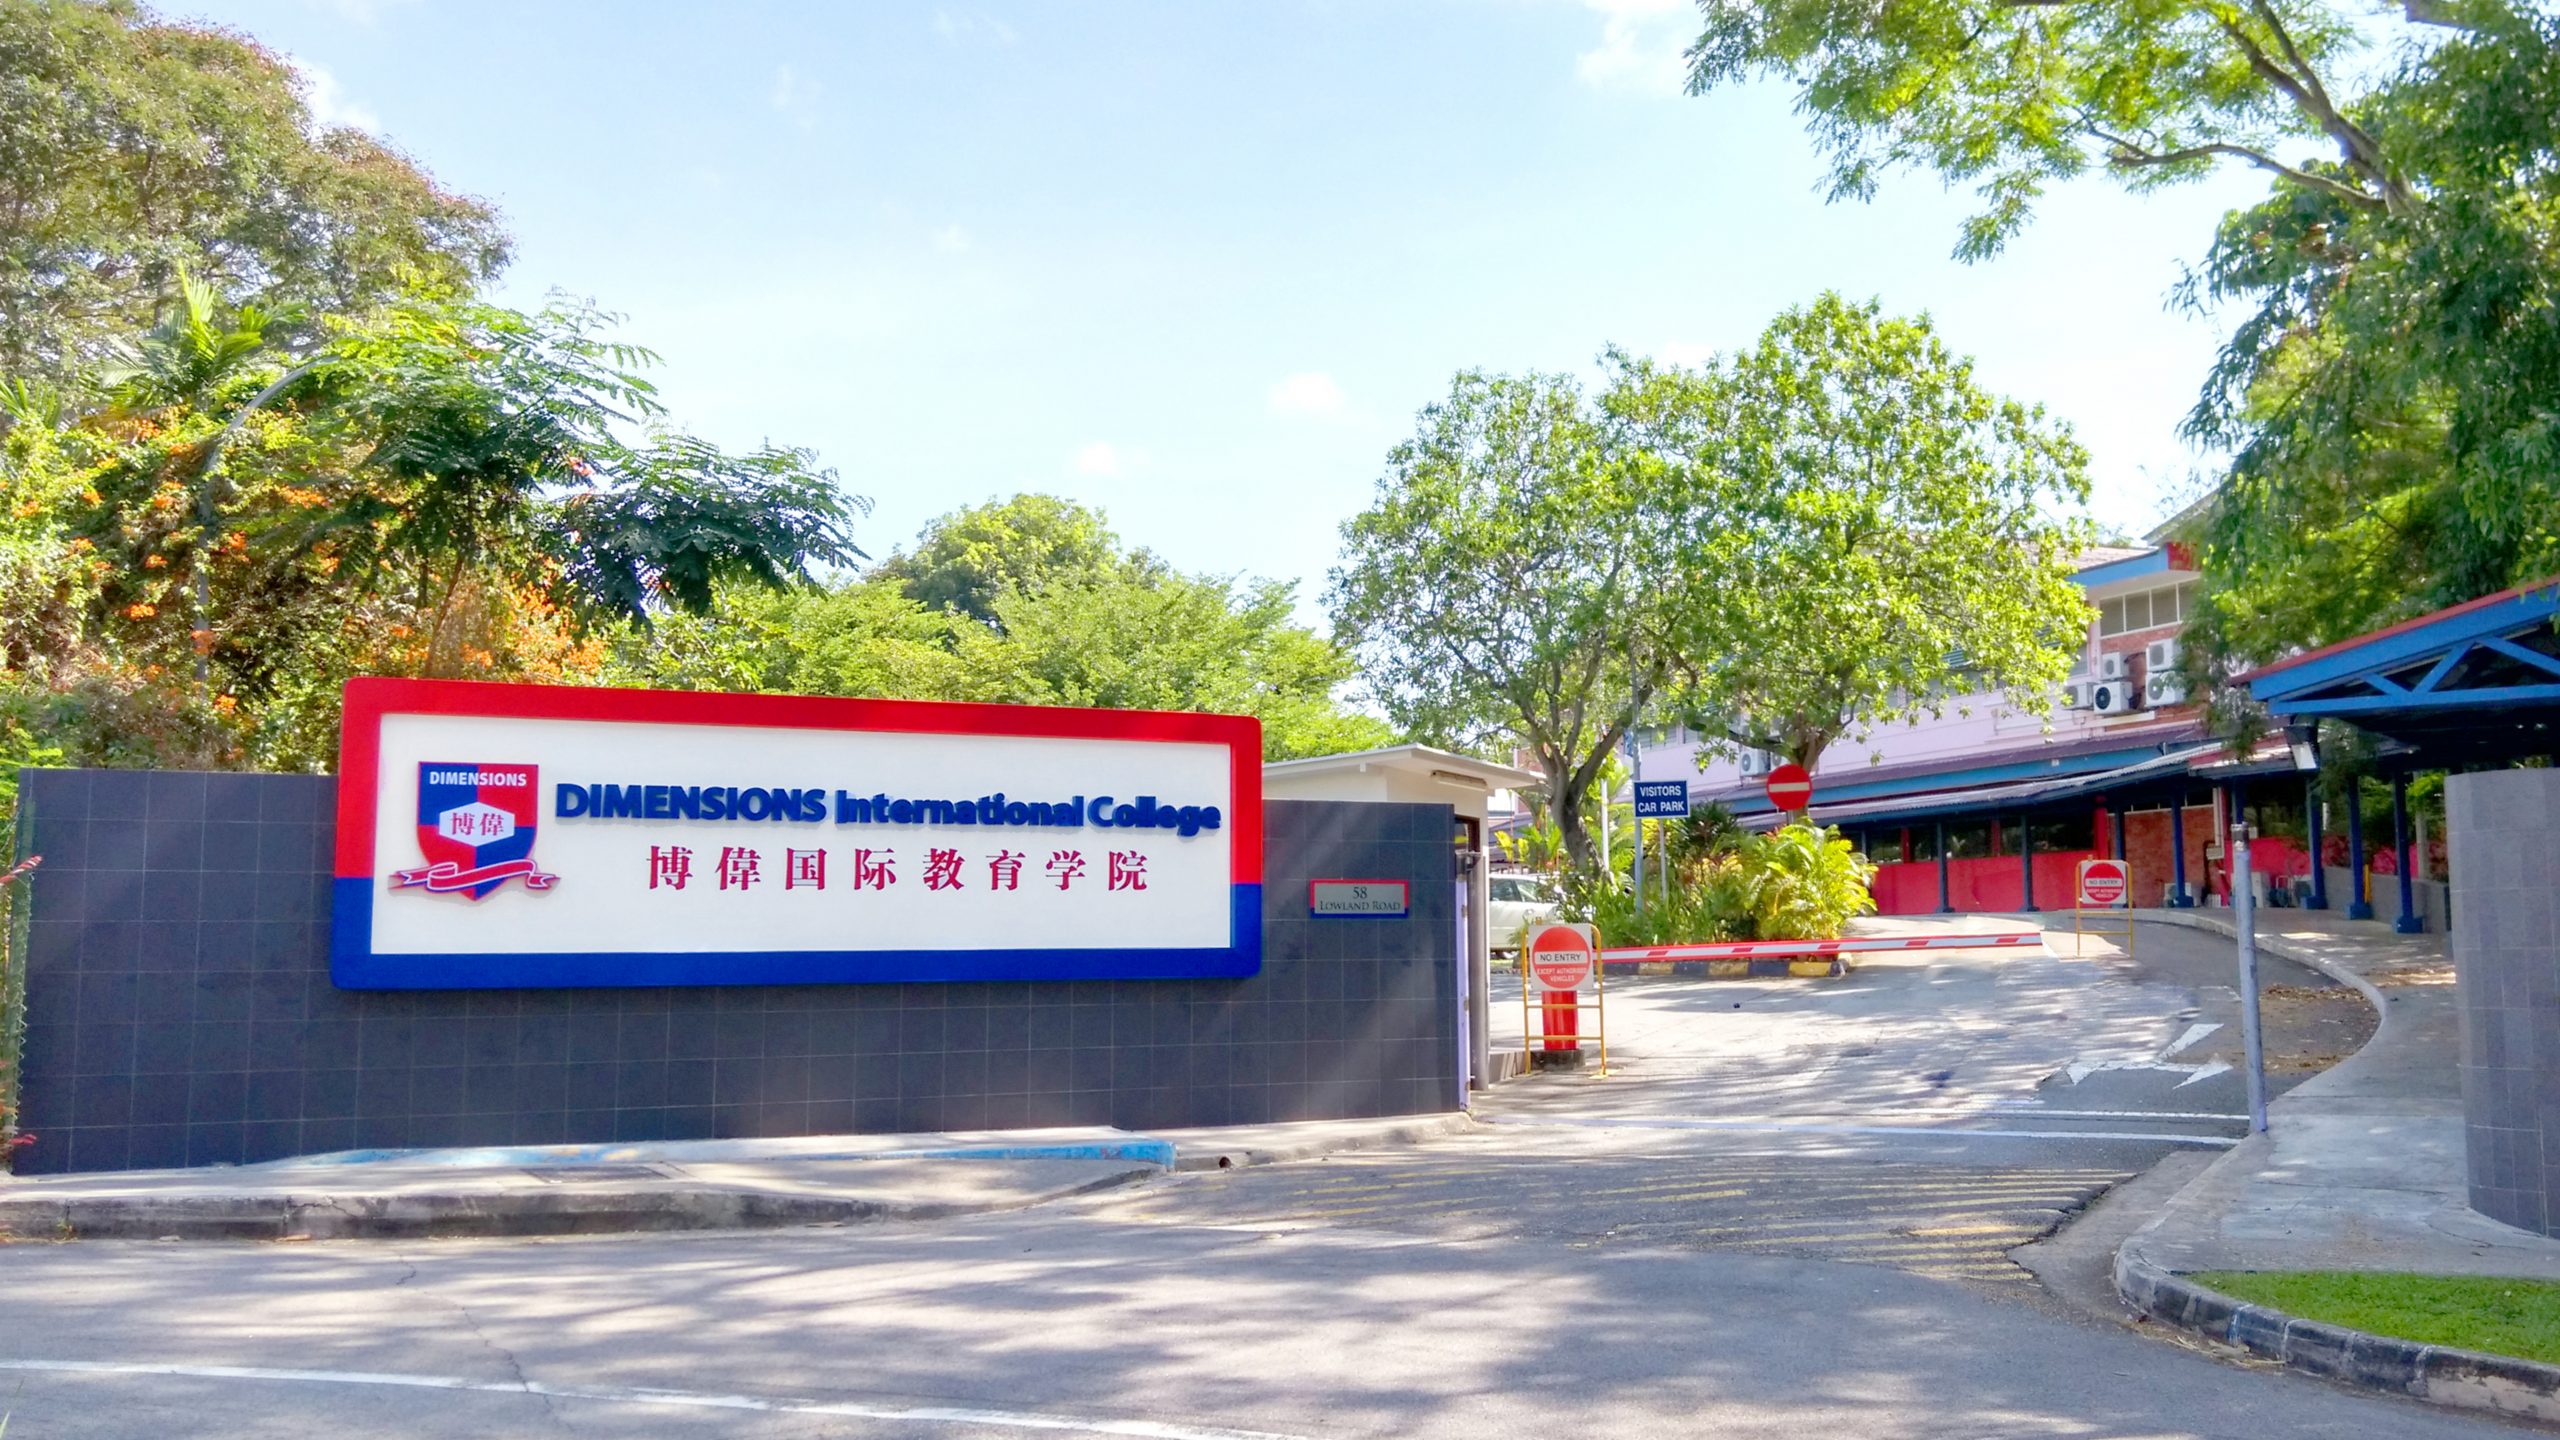 DIMENSIONS International College Kovan Campus – Entrance